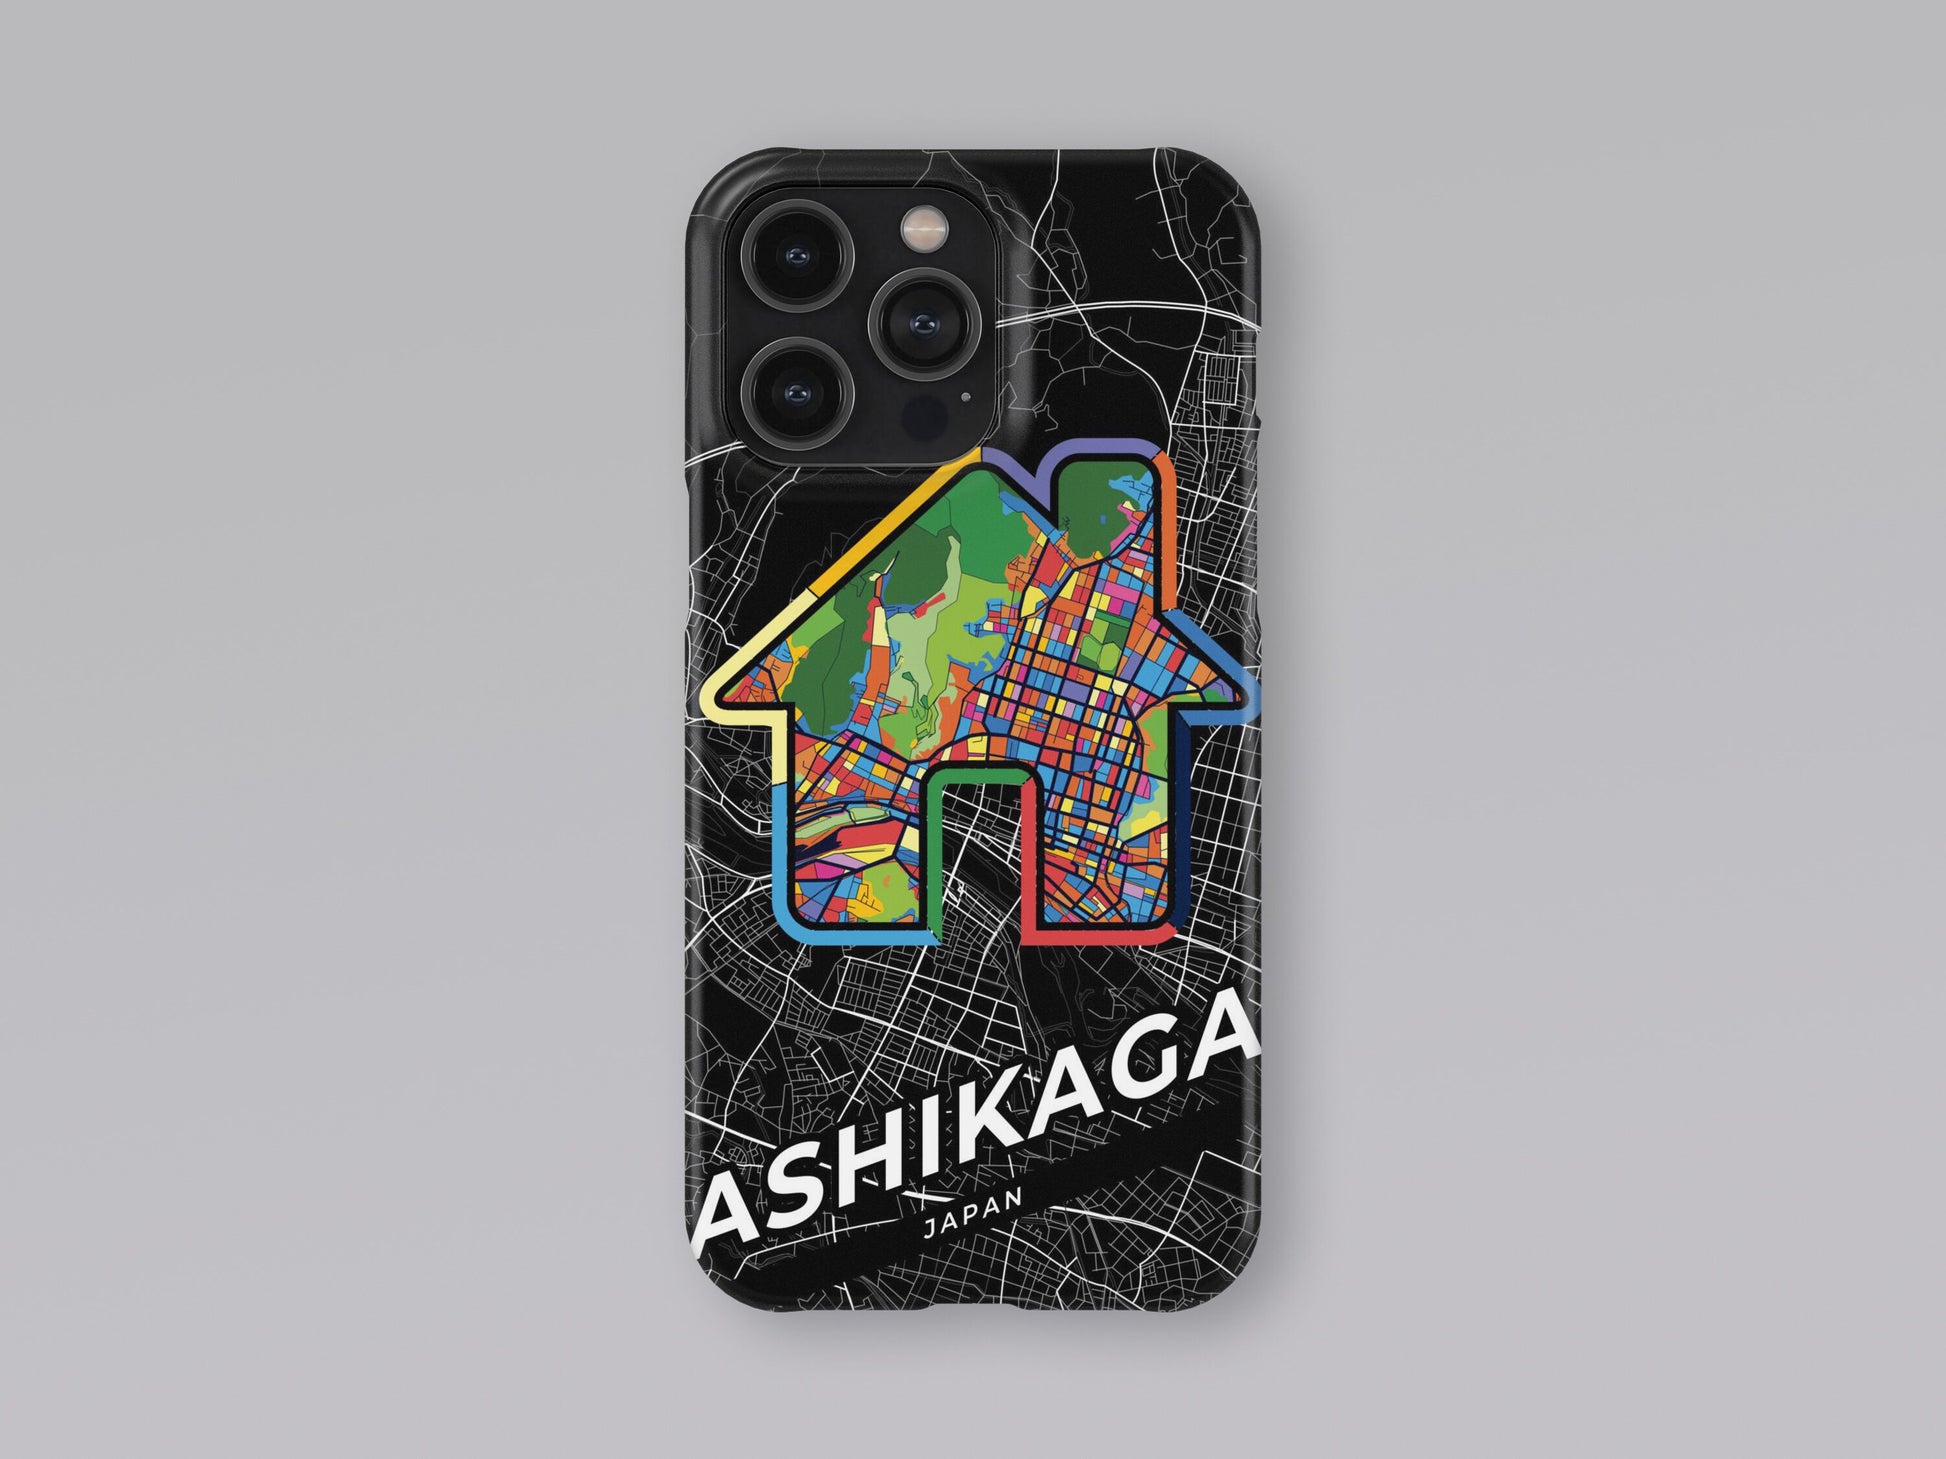 Ashikaga Japan slim phone case with colorful icon. Birthday, wedding or housewarming gift. Couple match cases. 3